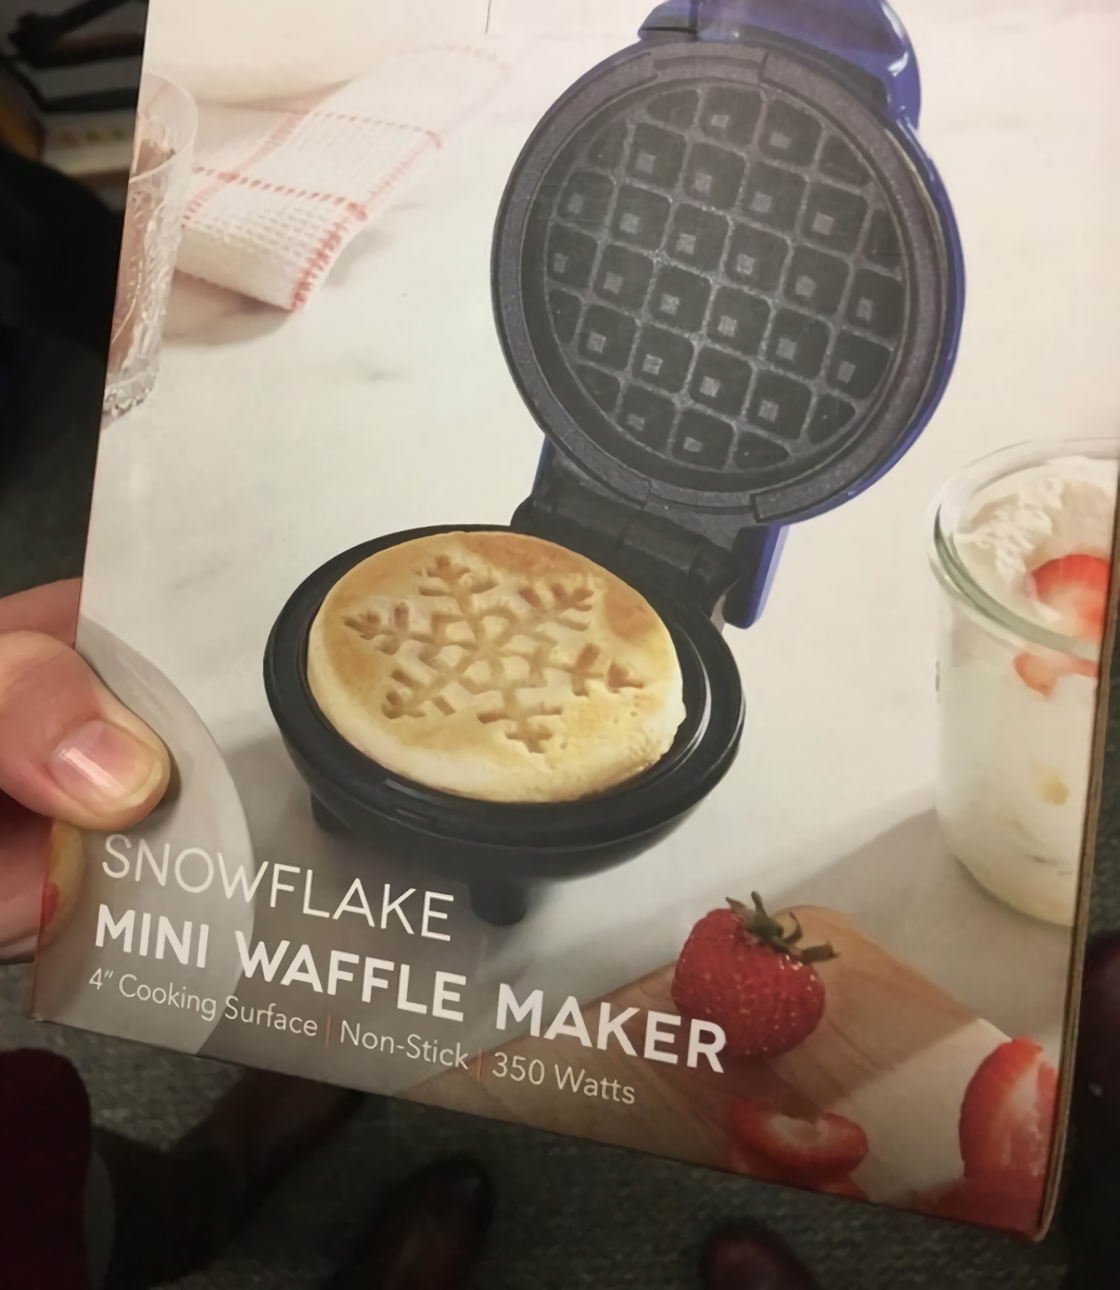 Design - Snowflake Mini Waffle Maker 4" Cooking Surface NonStick 350 Watts